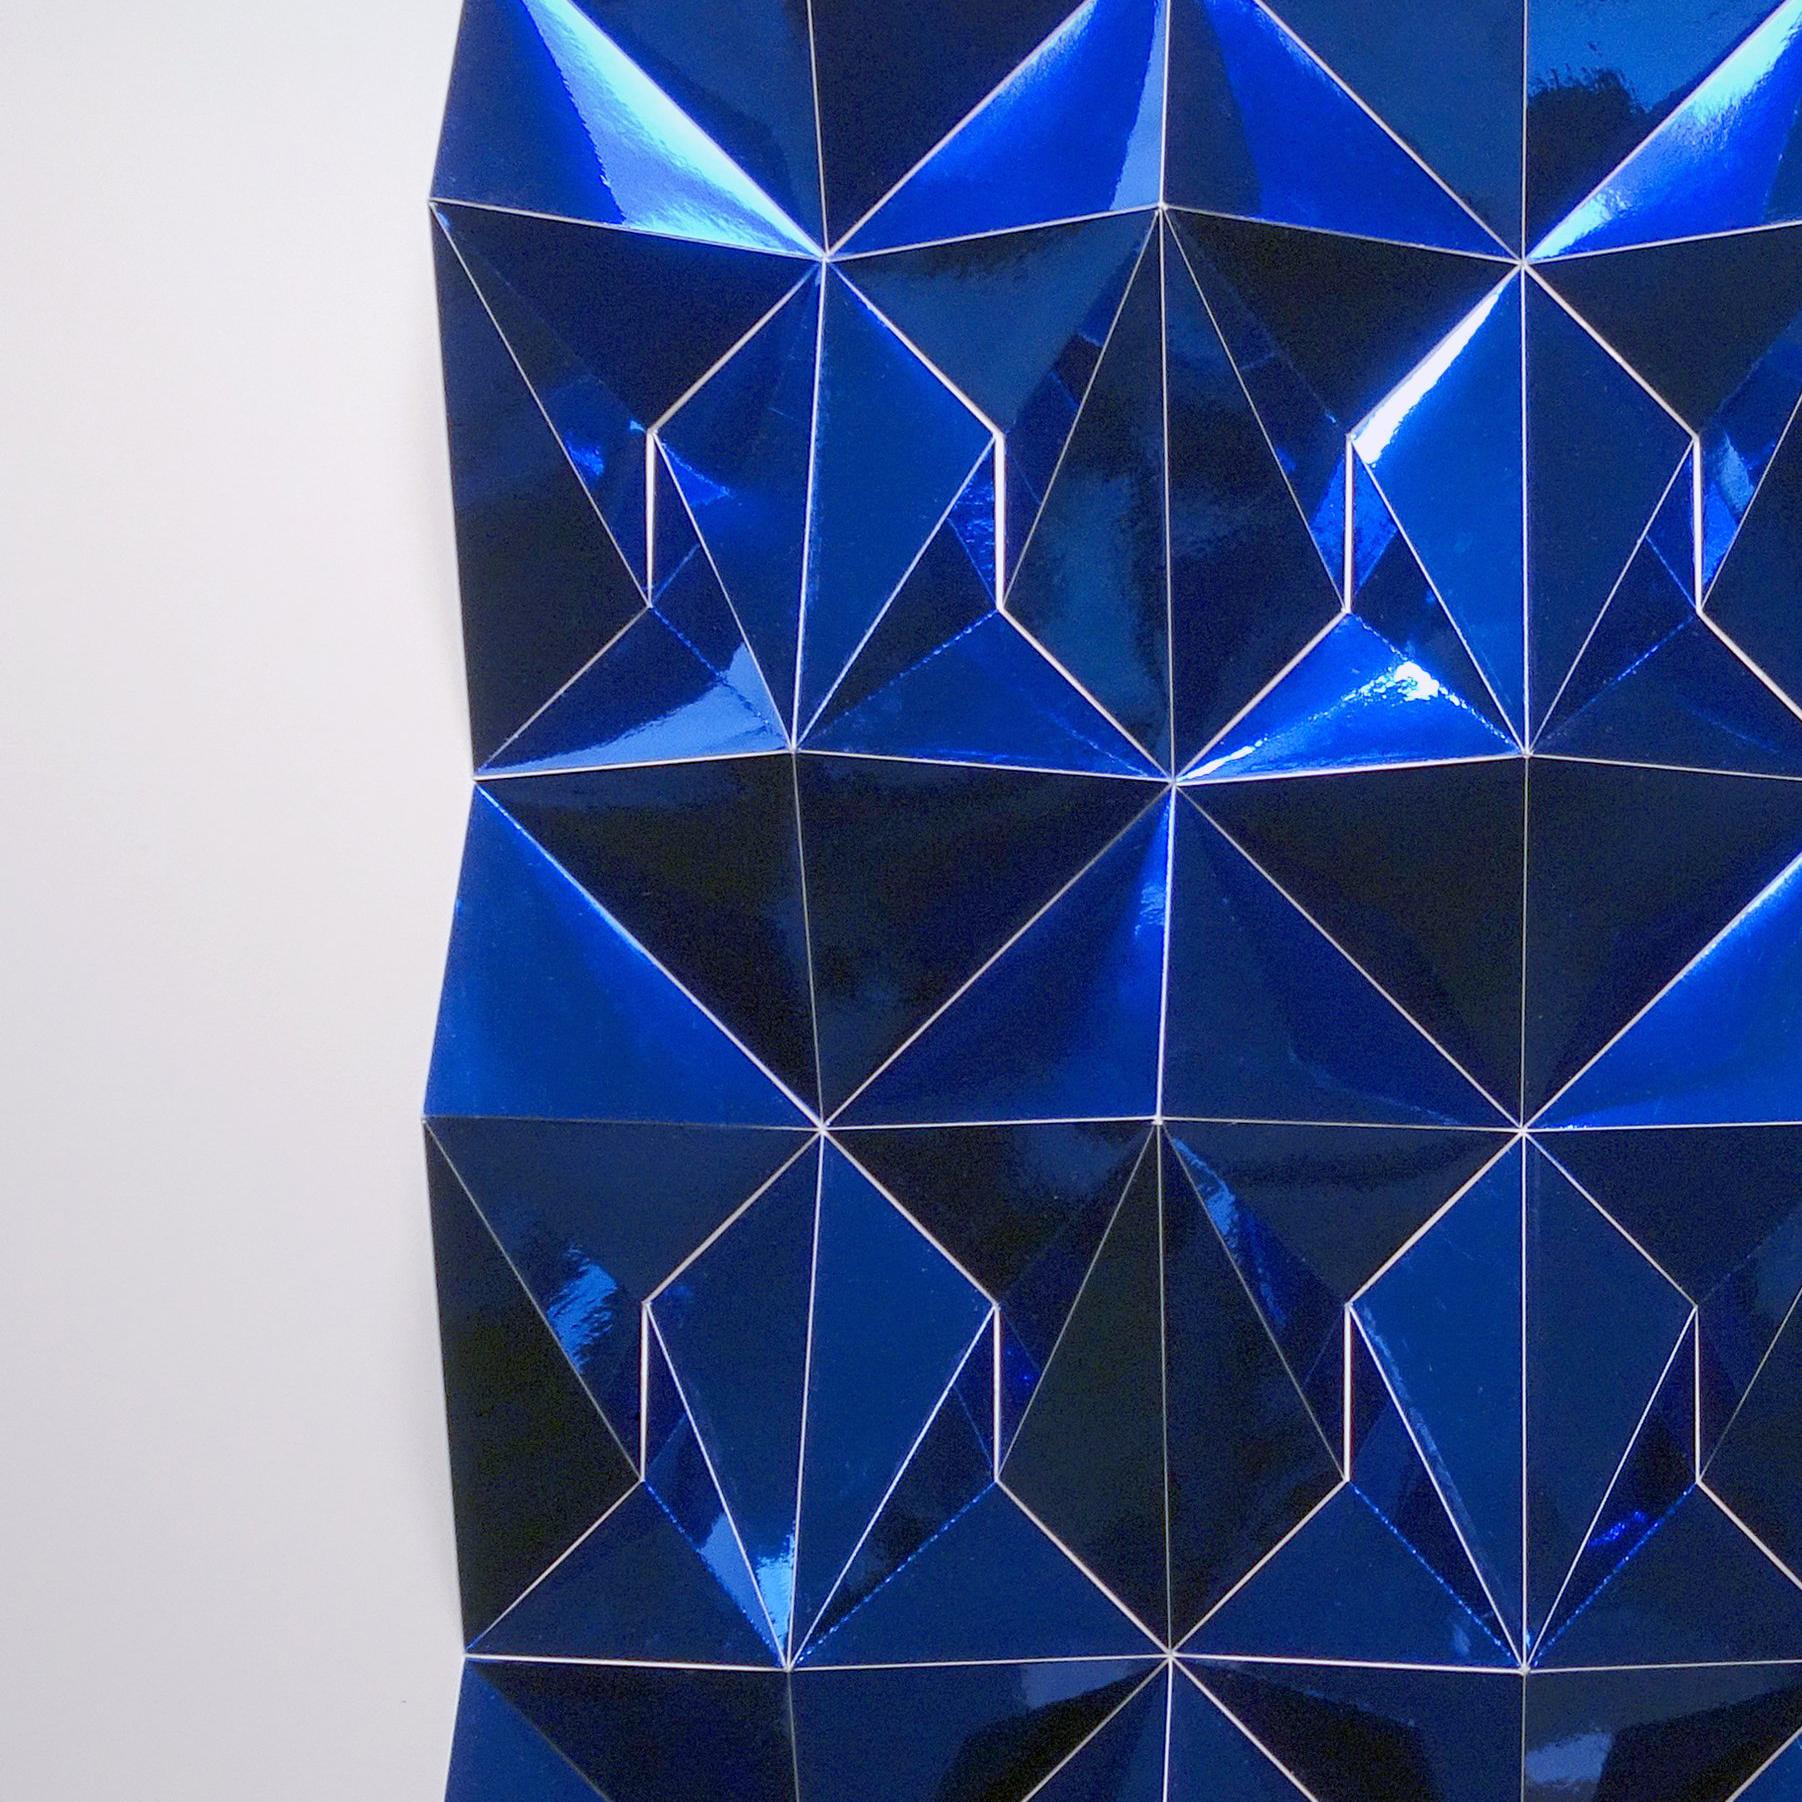 Ara 377 in Blau – Sculpture von Matt Shlian